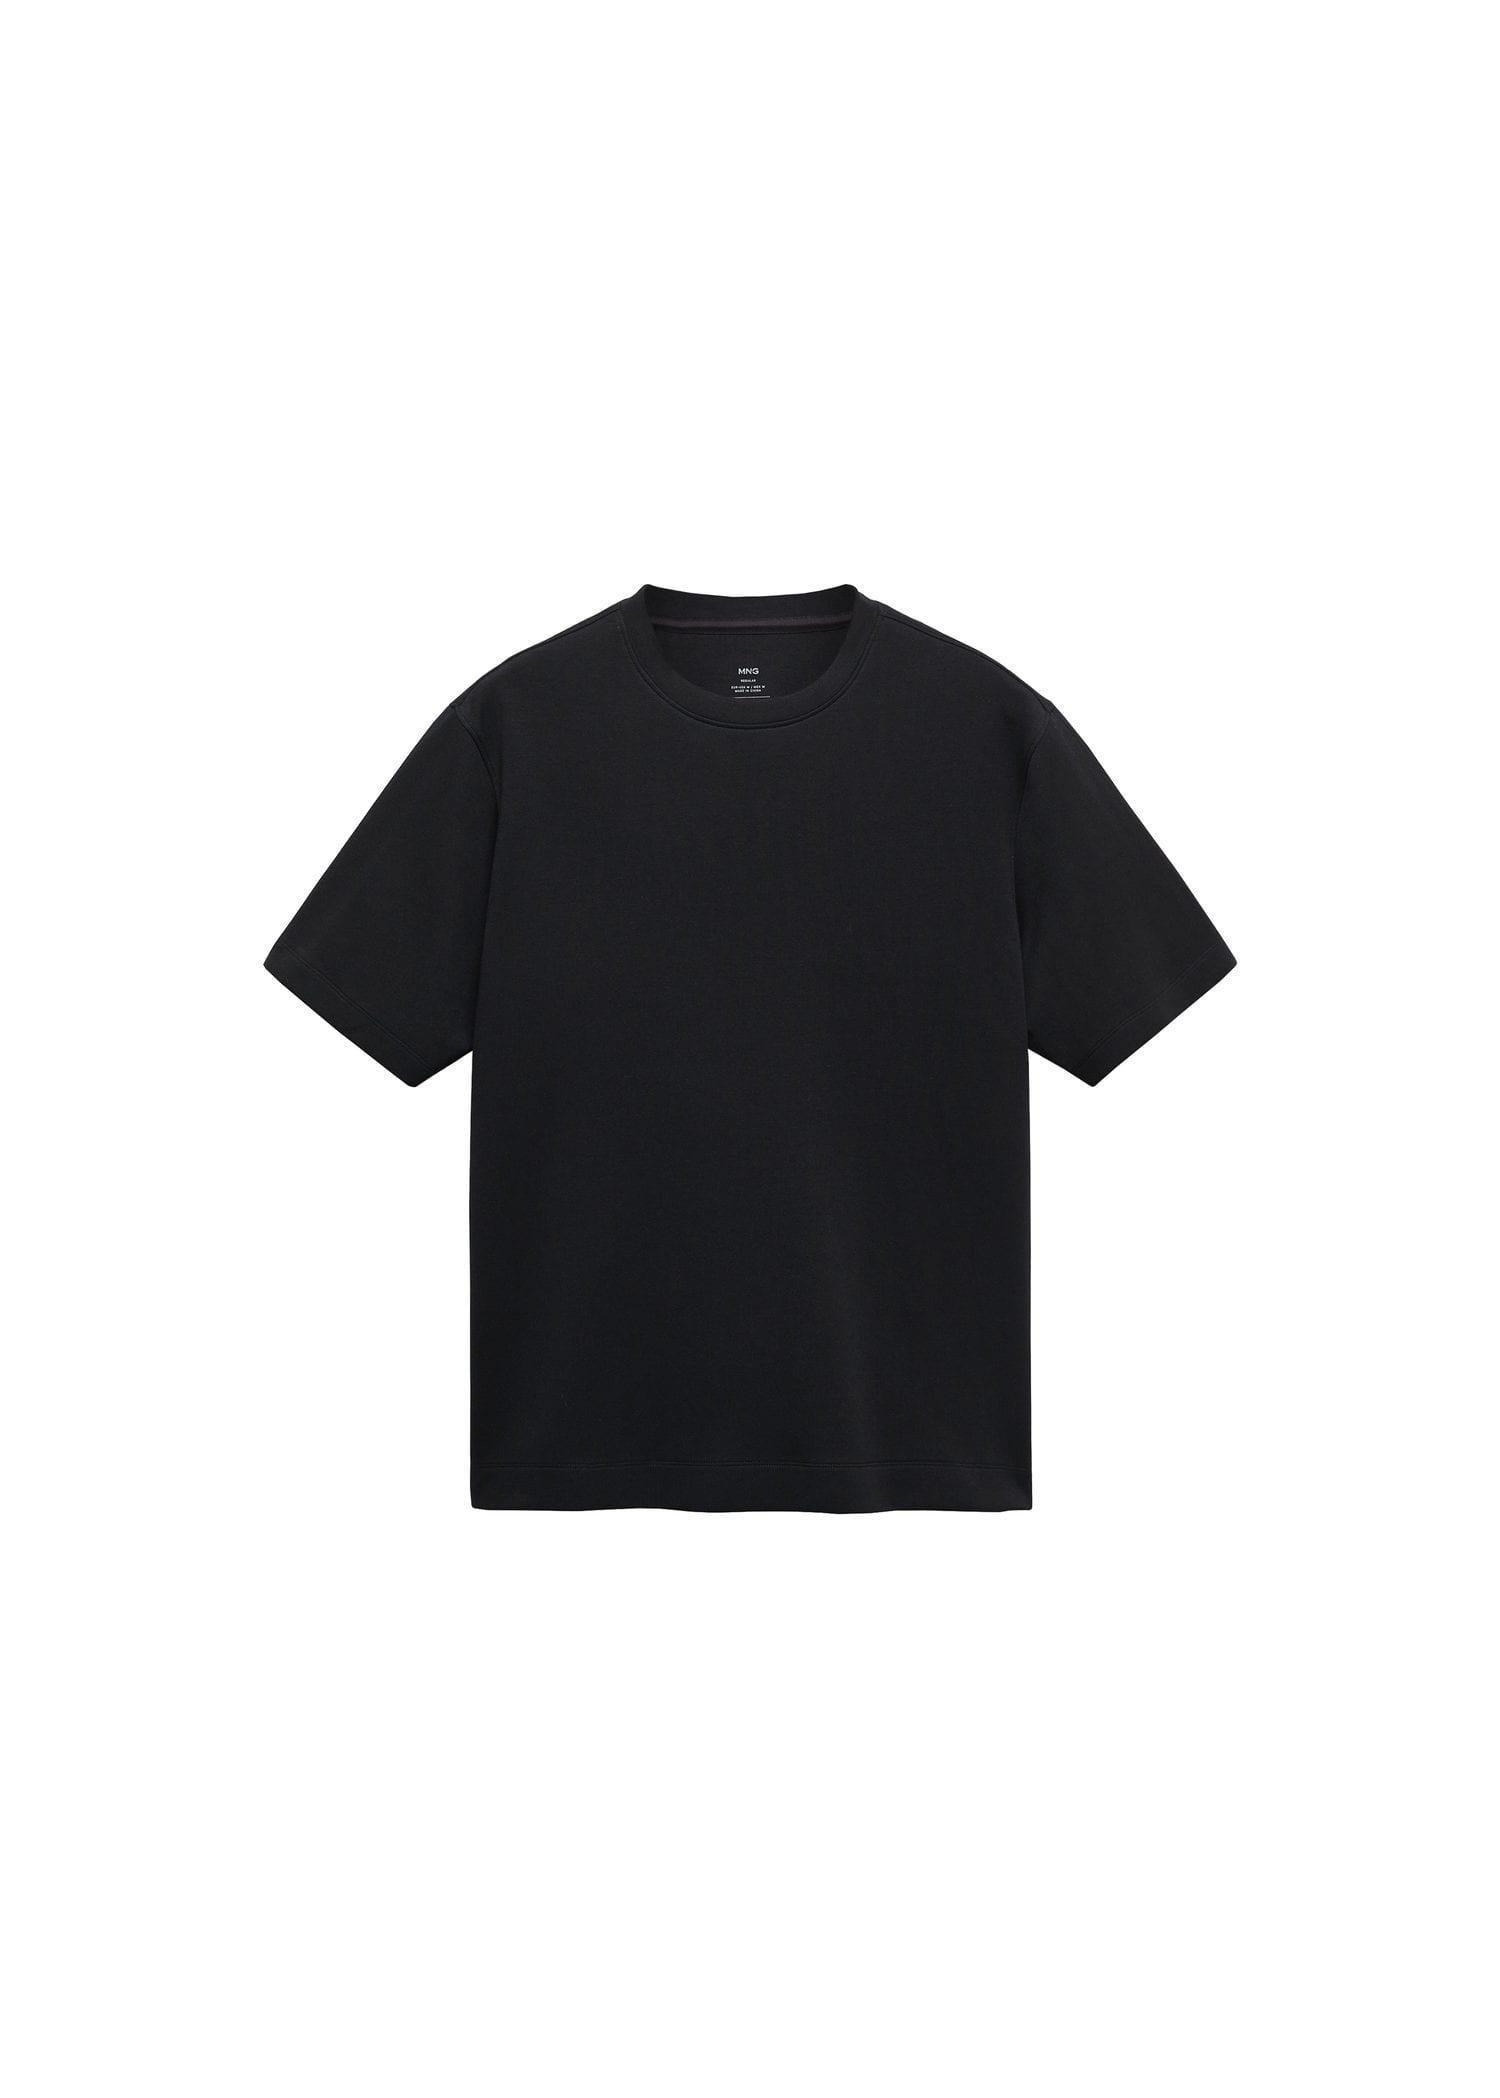 Mango - Black Short Sleeve Cotton Sweatshirt